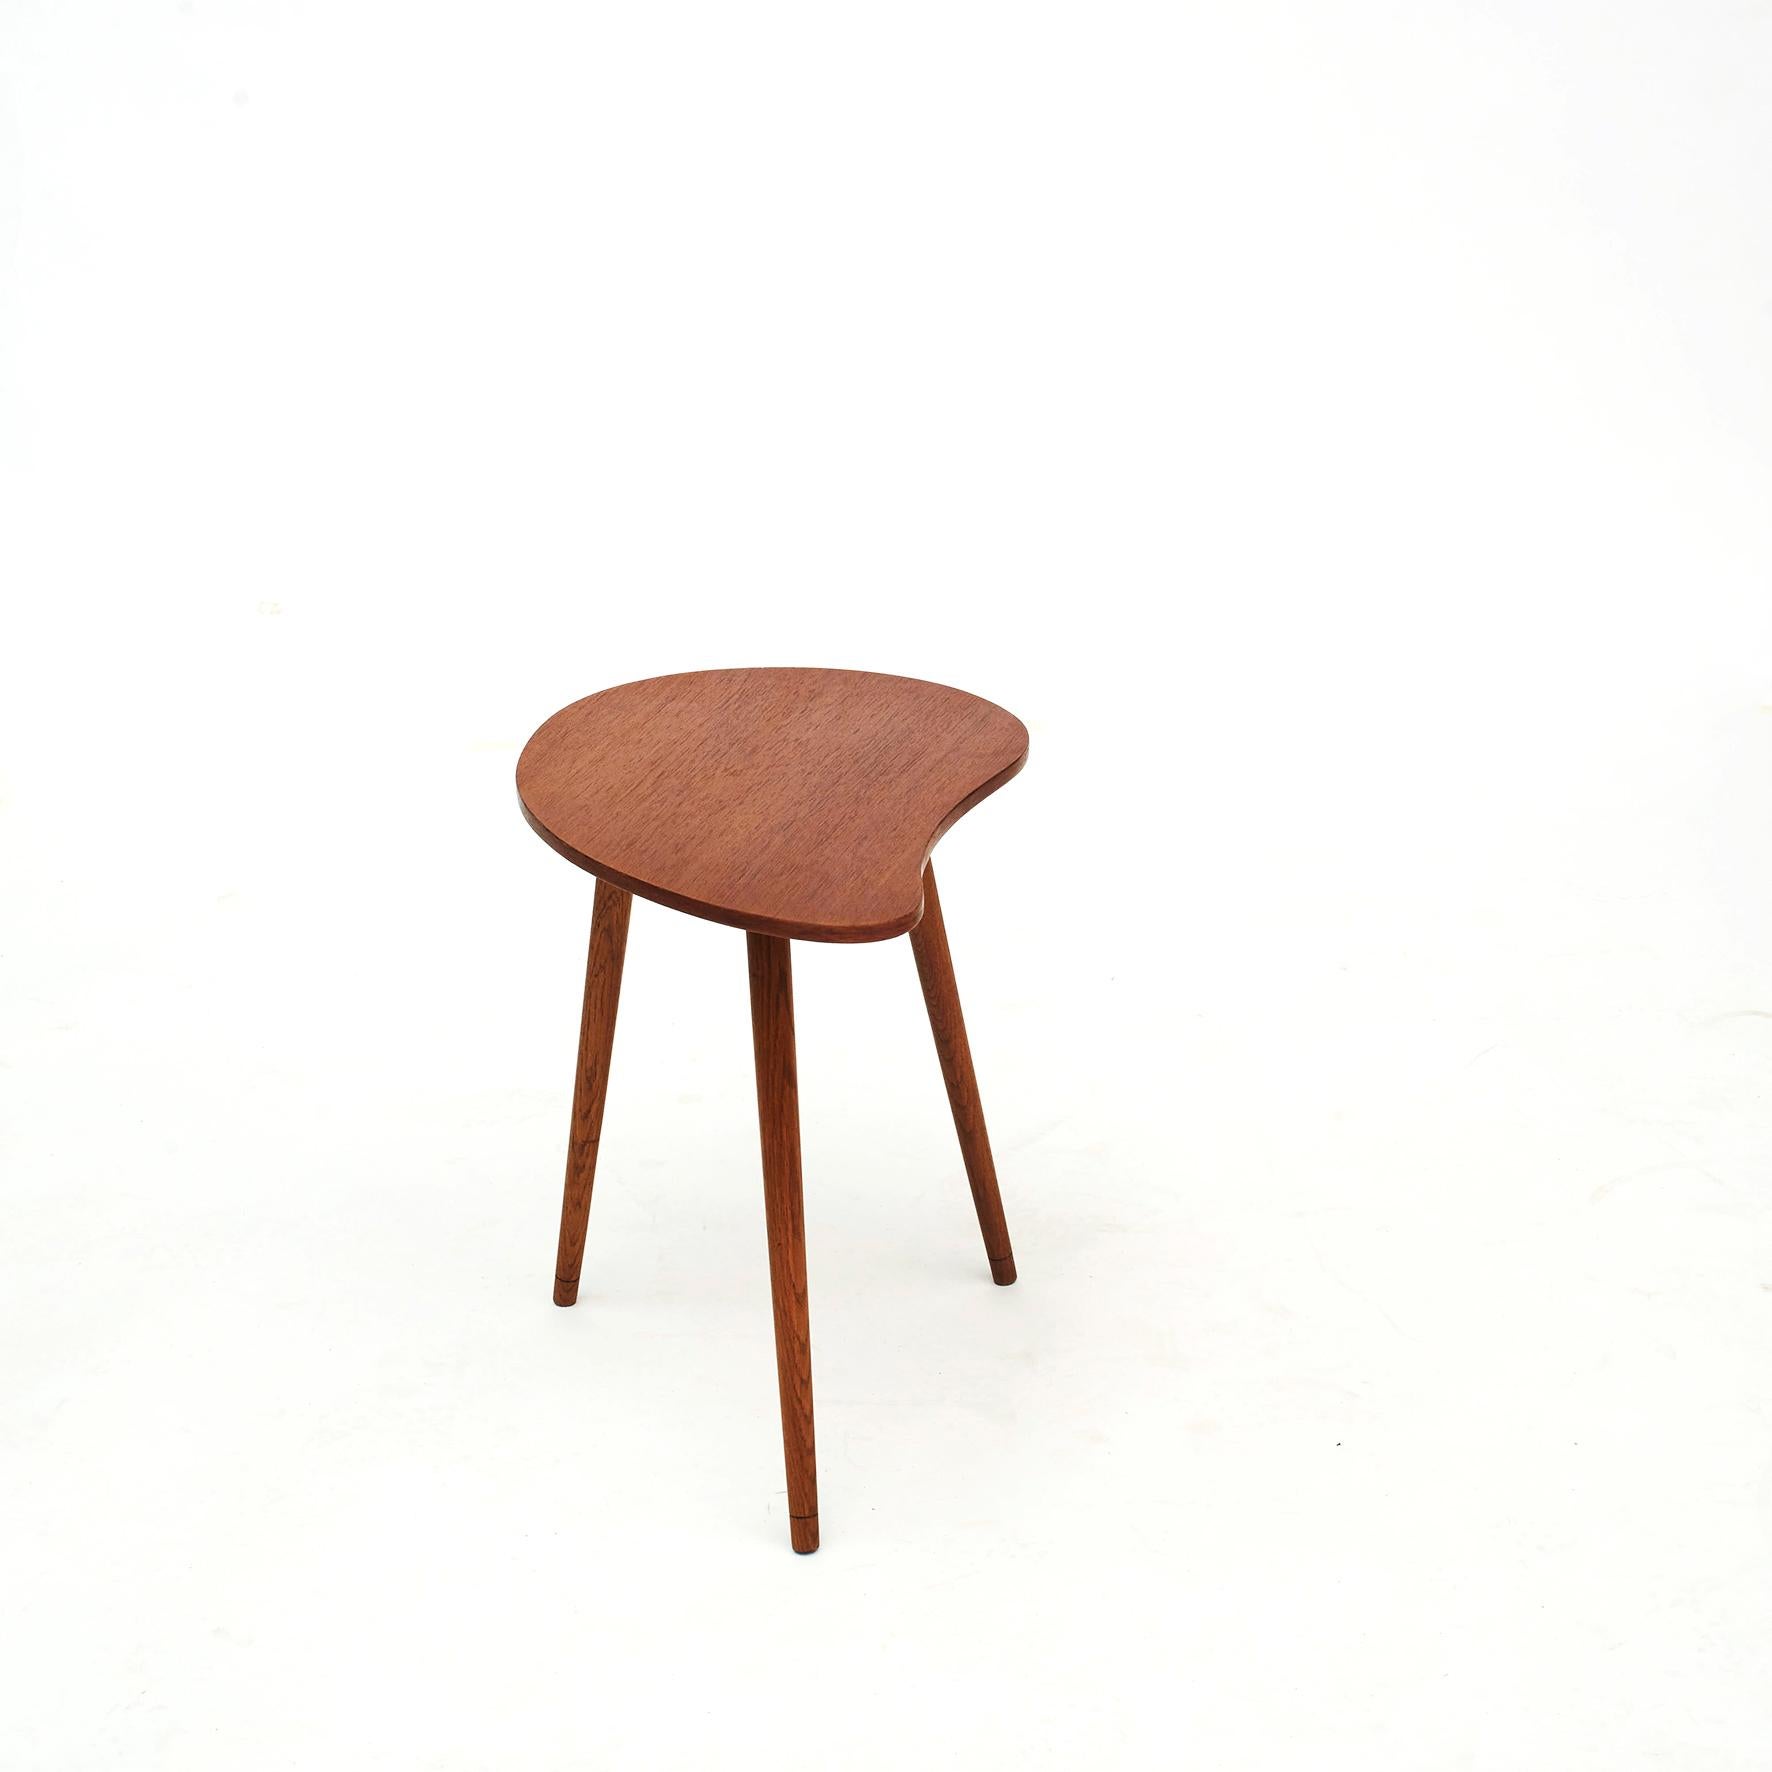 Side table, Danish design.
Kidney-shaped table top in teak, resting on three long tapered oak legs.
Denmark ca. 1960.